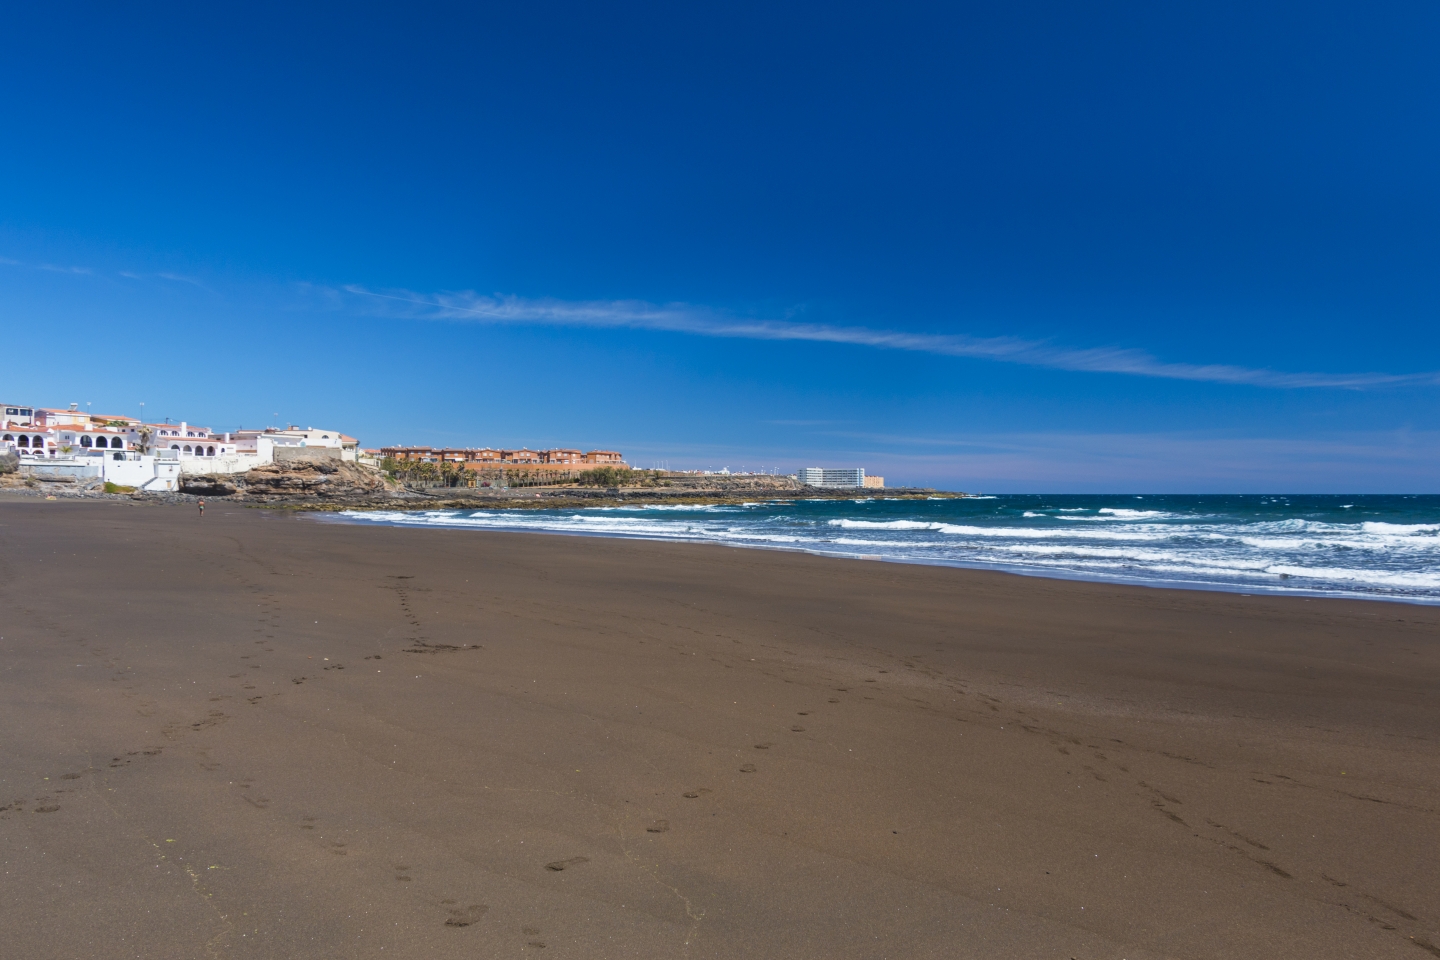 Playa del Hombre beach gets consistent surf waves